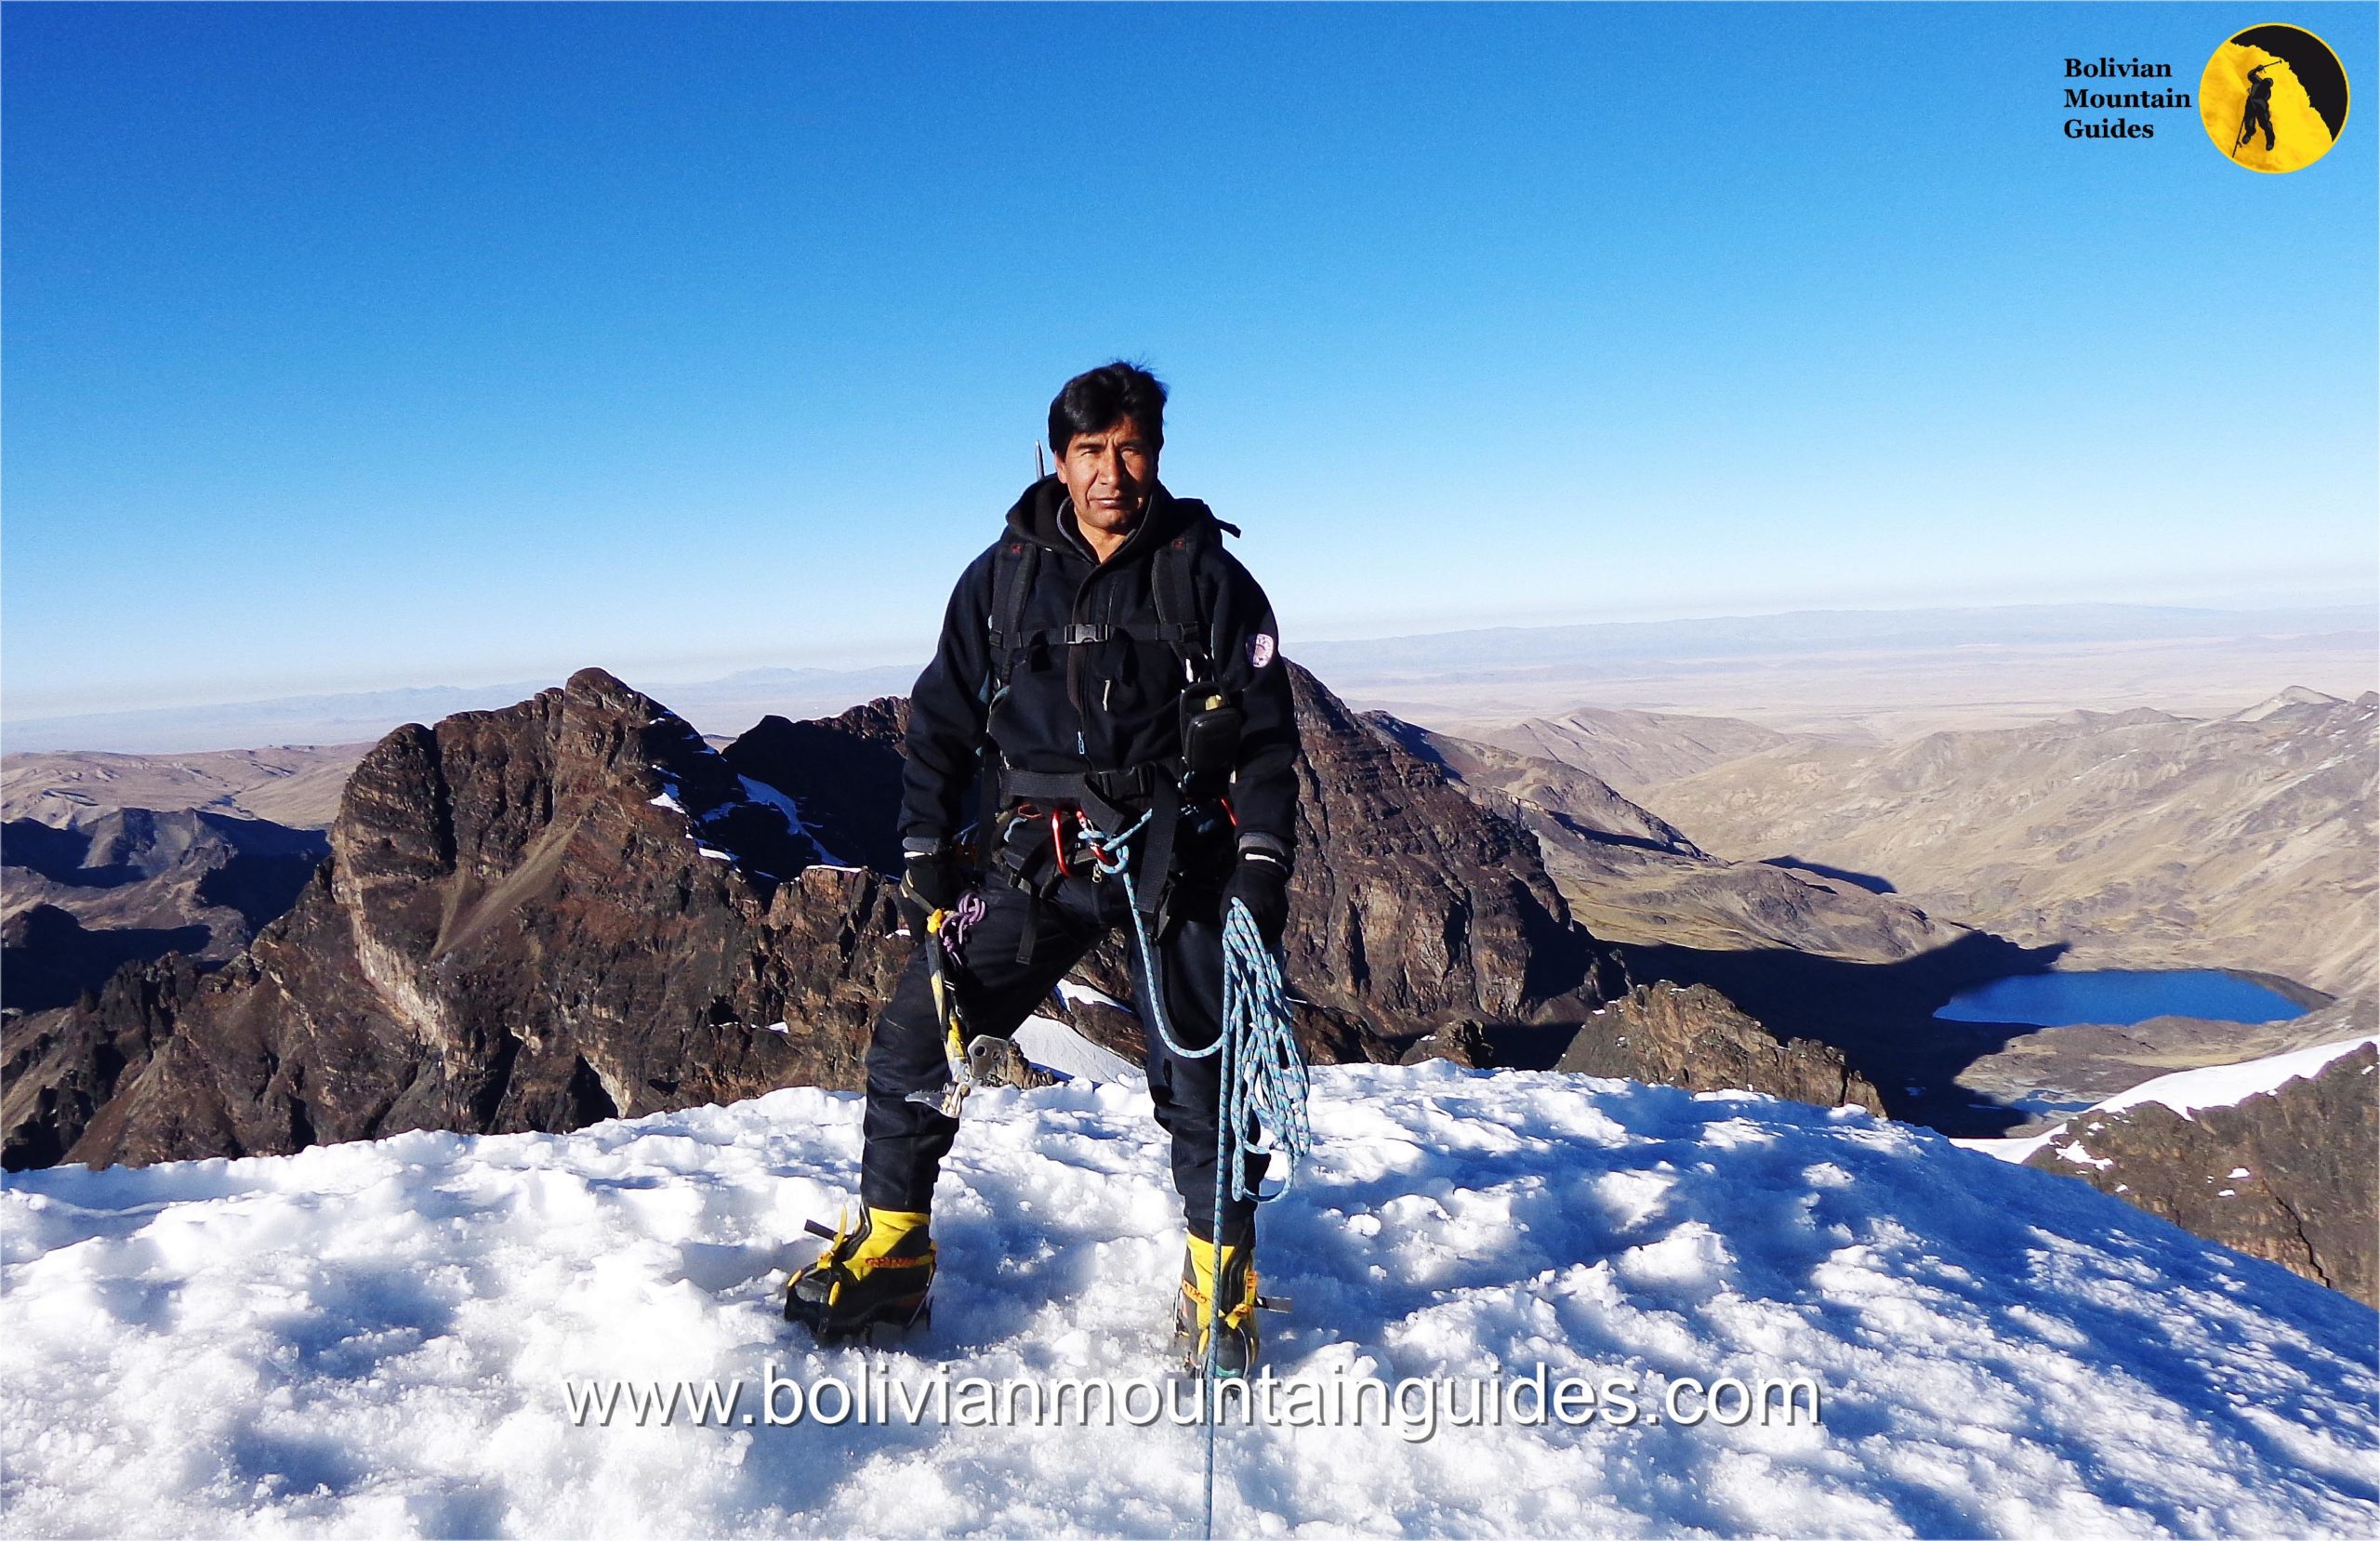 Bolivian Mountain Guides